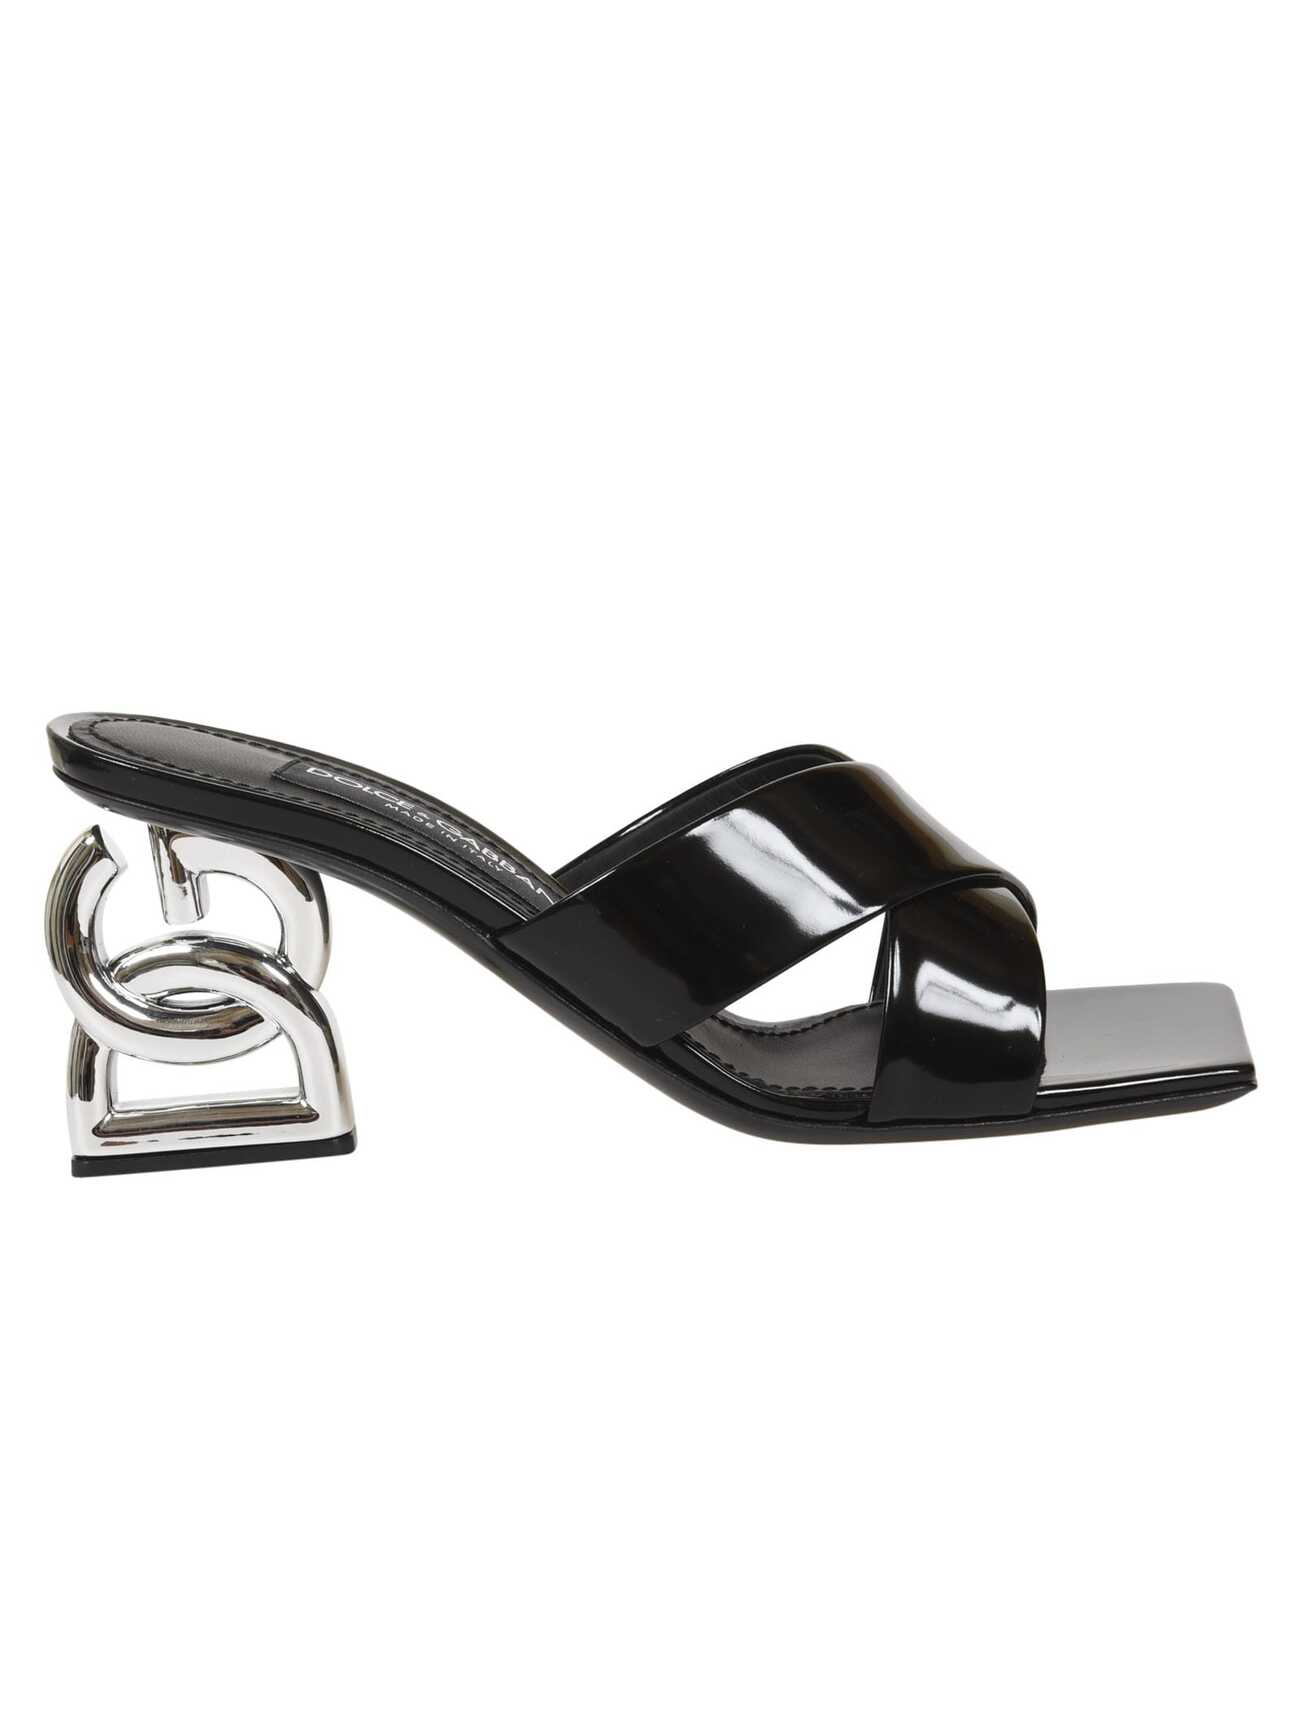 Dolce & Gabbana Dg Heel Cross Strap Sandals in nero